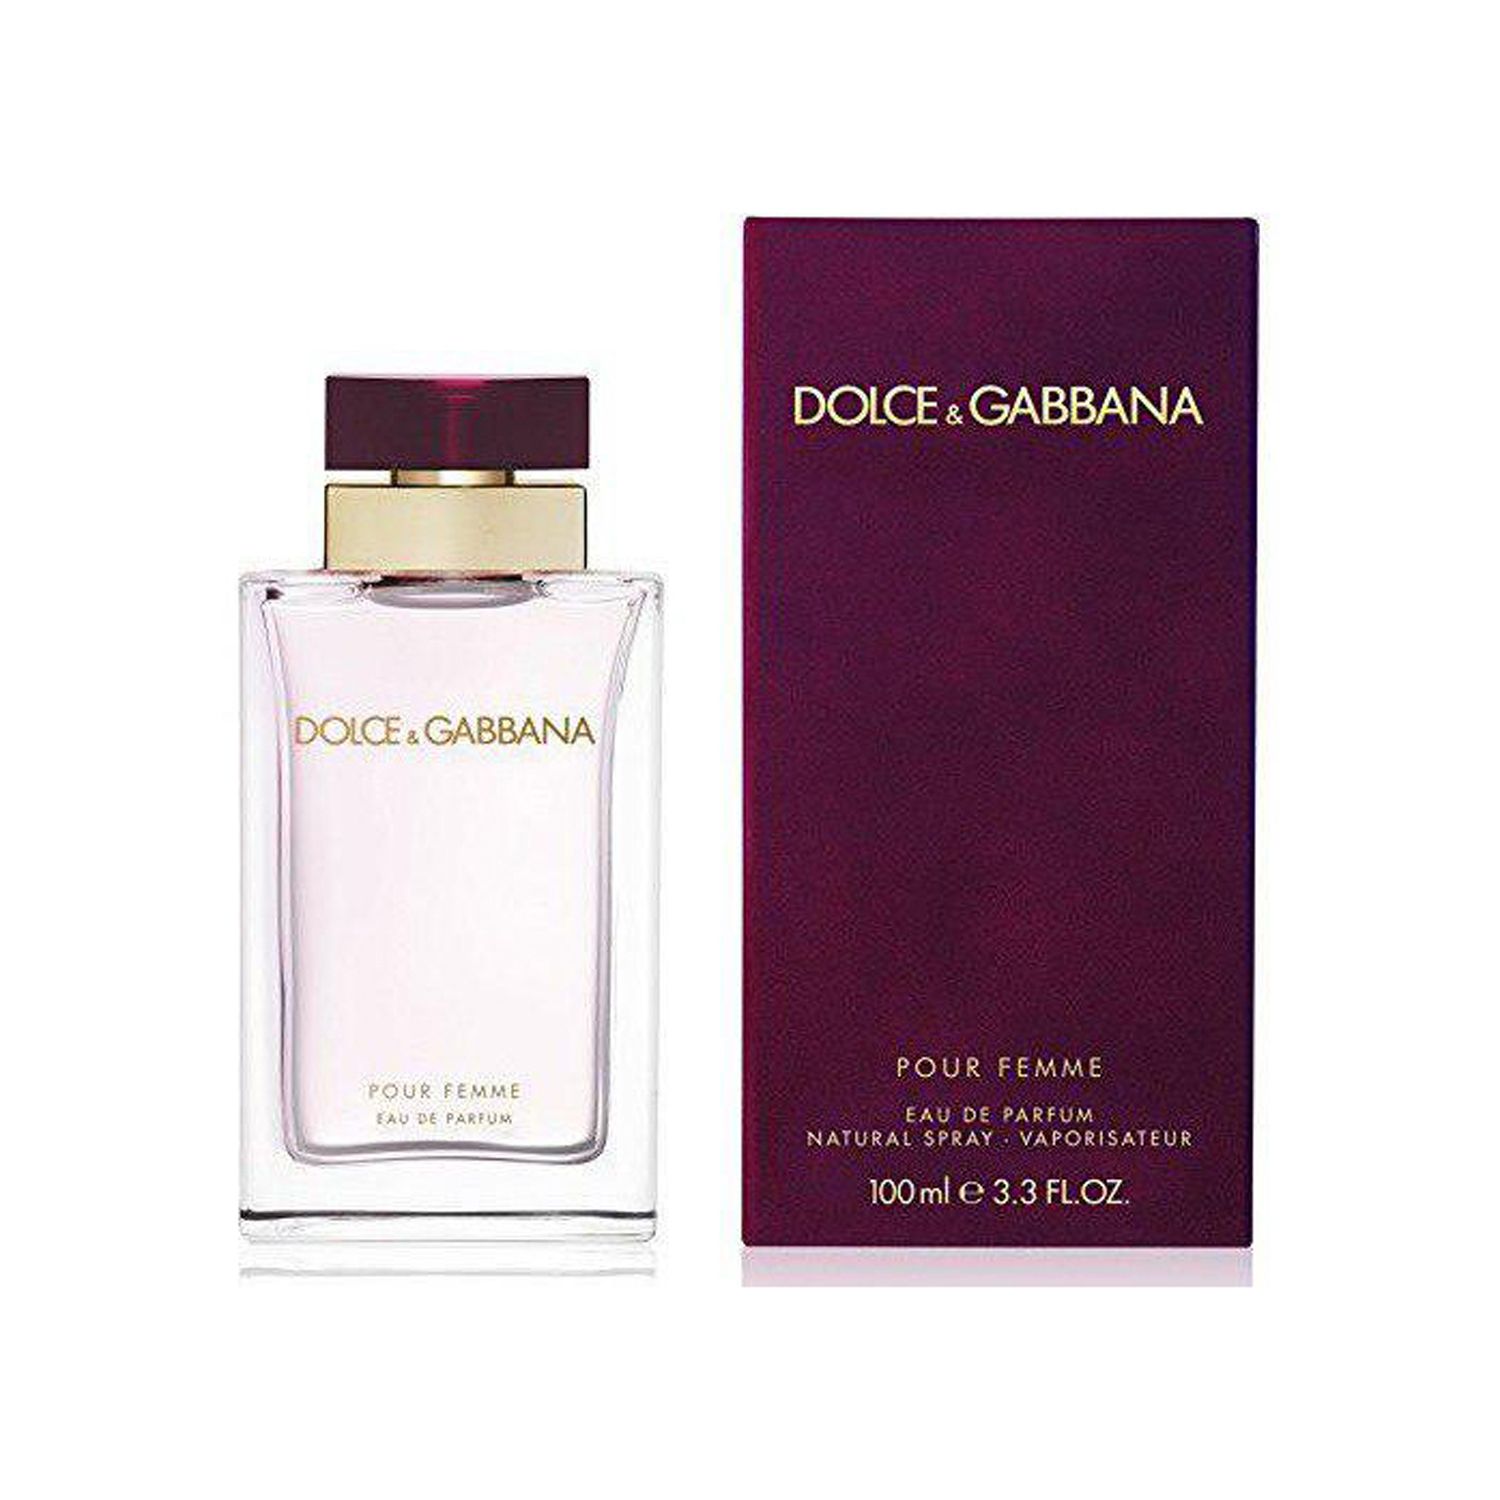 ادو پرفیوم زنانه دولچه گابانا مدل Dolce & Gabbana Pour Femme حجم 100 میلی لیتر